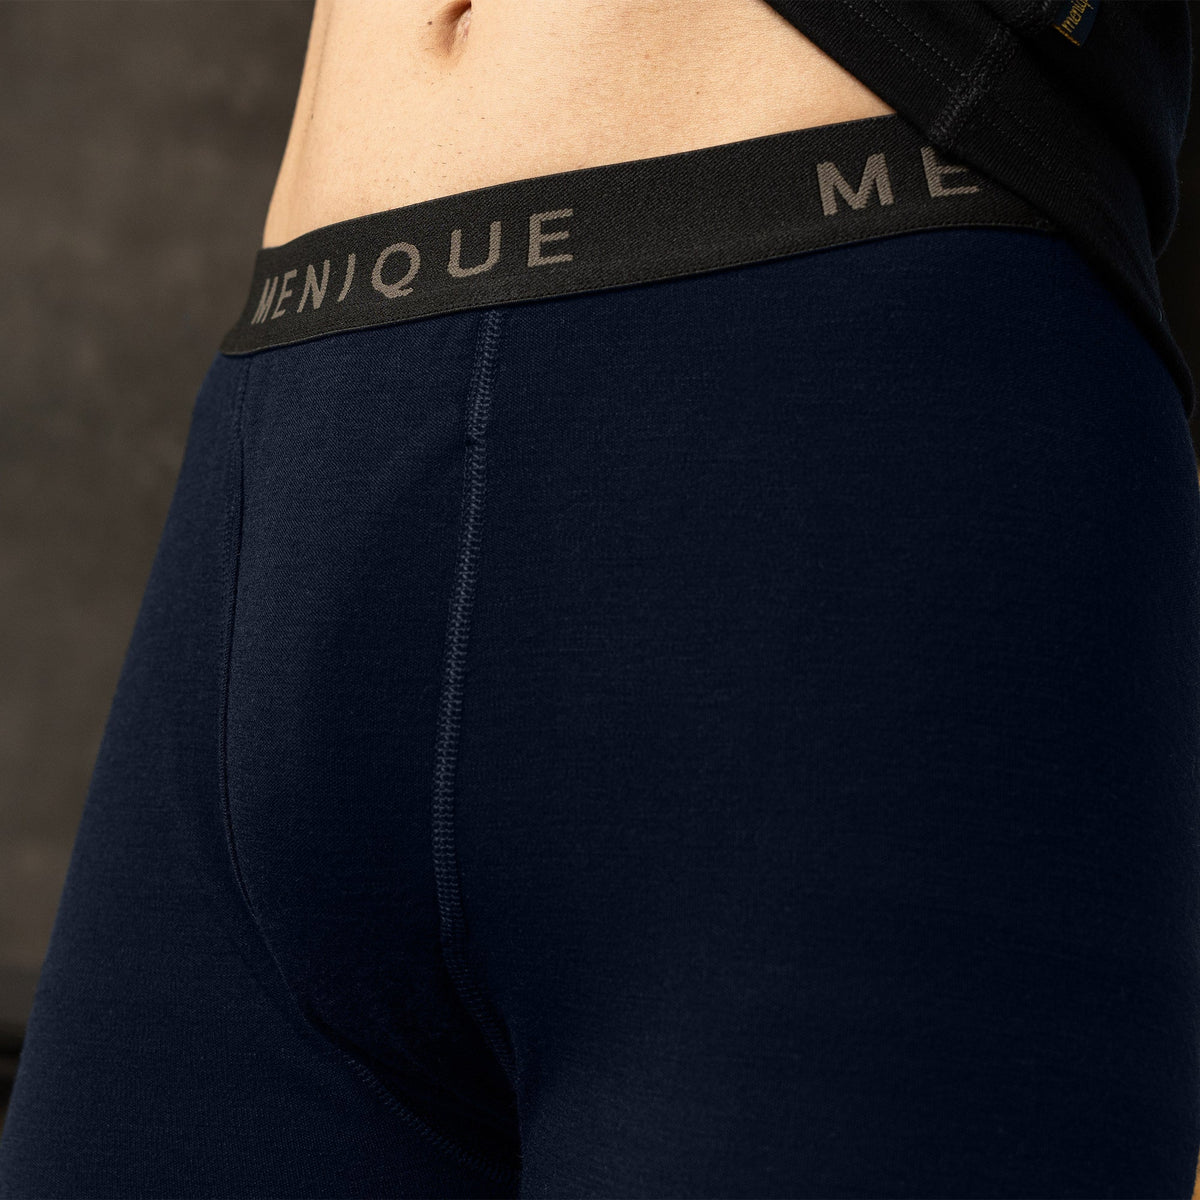 Menique Slim Fit 100% Merino Wool Mens Pants